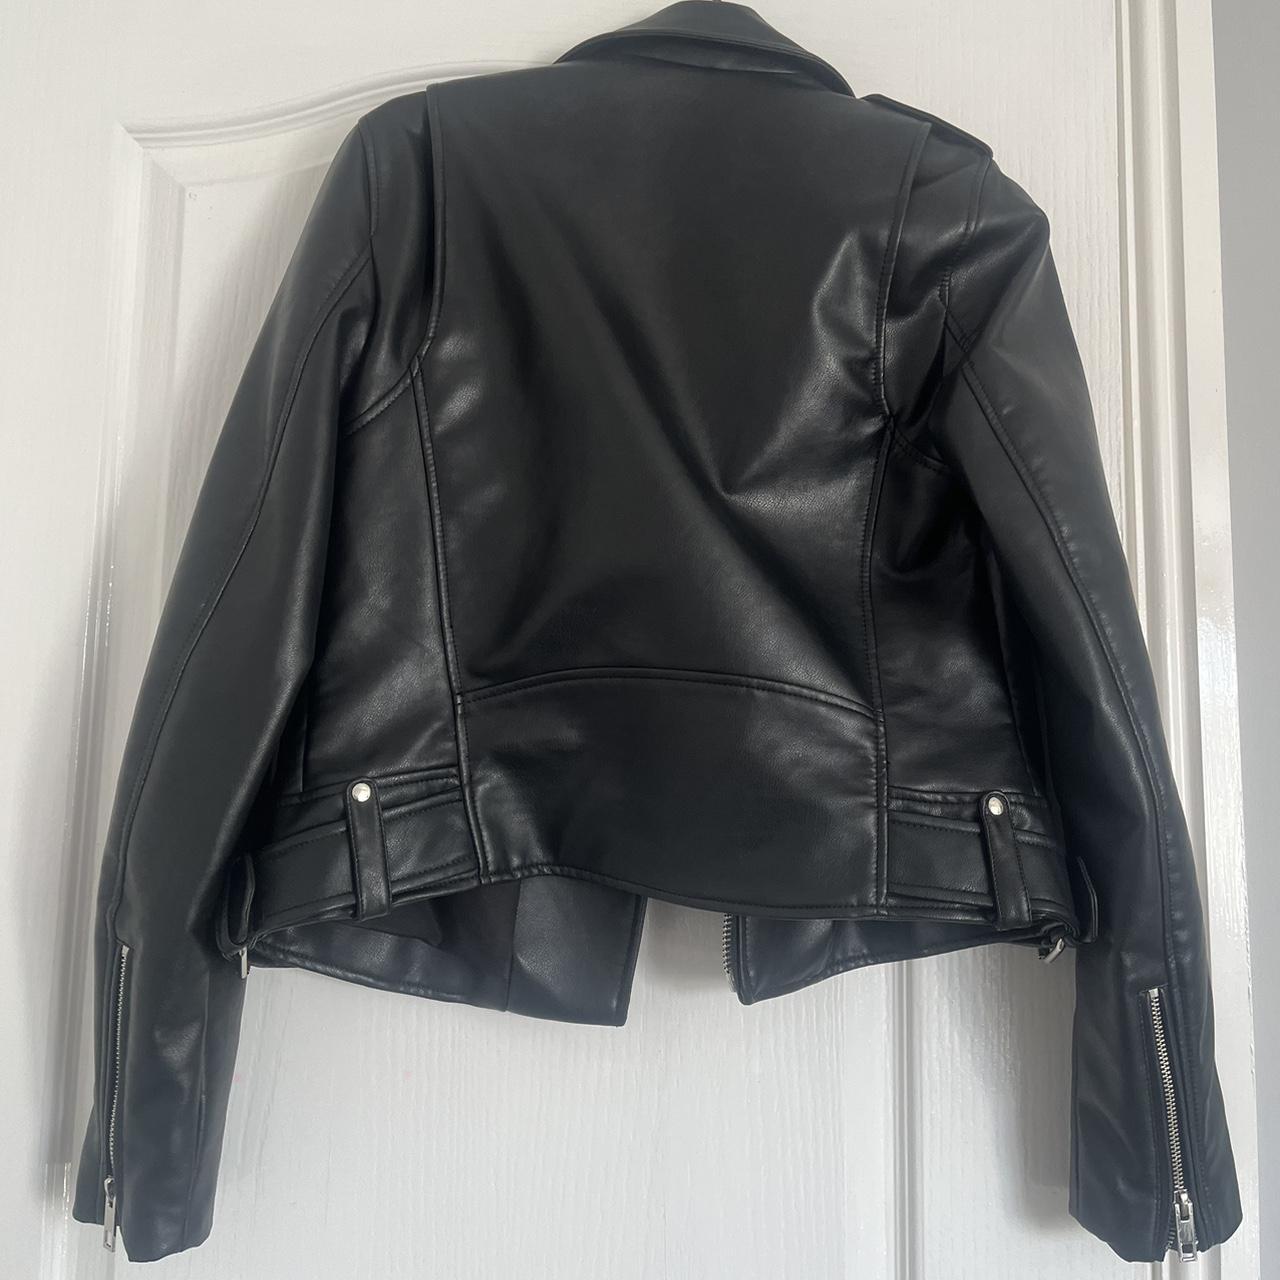 zara leather jacket never worn before - Depop